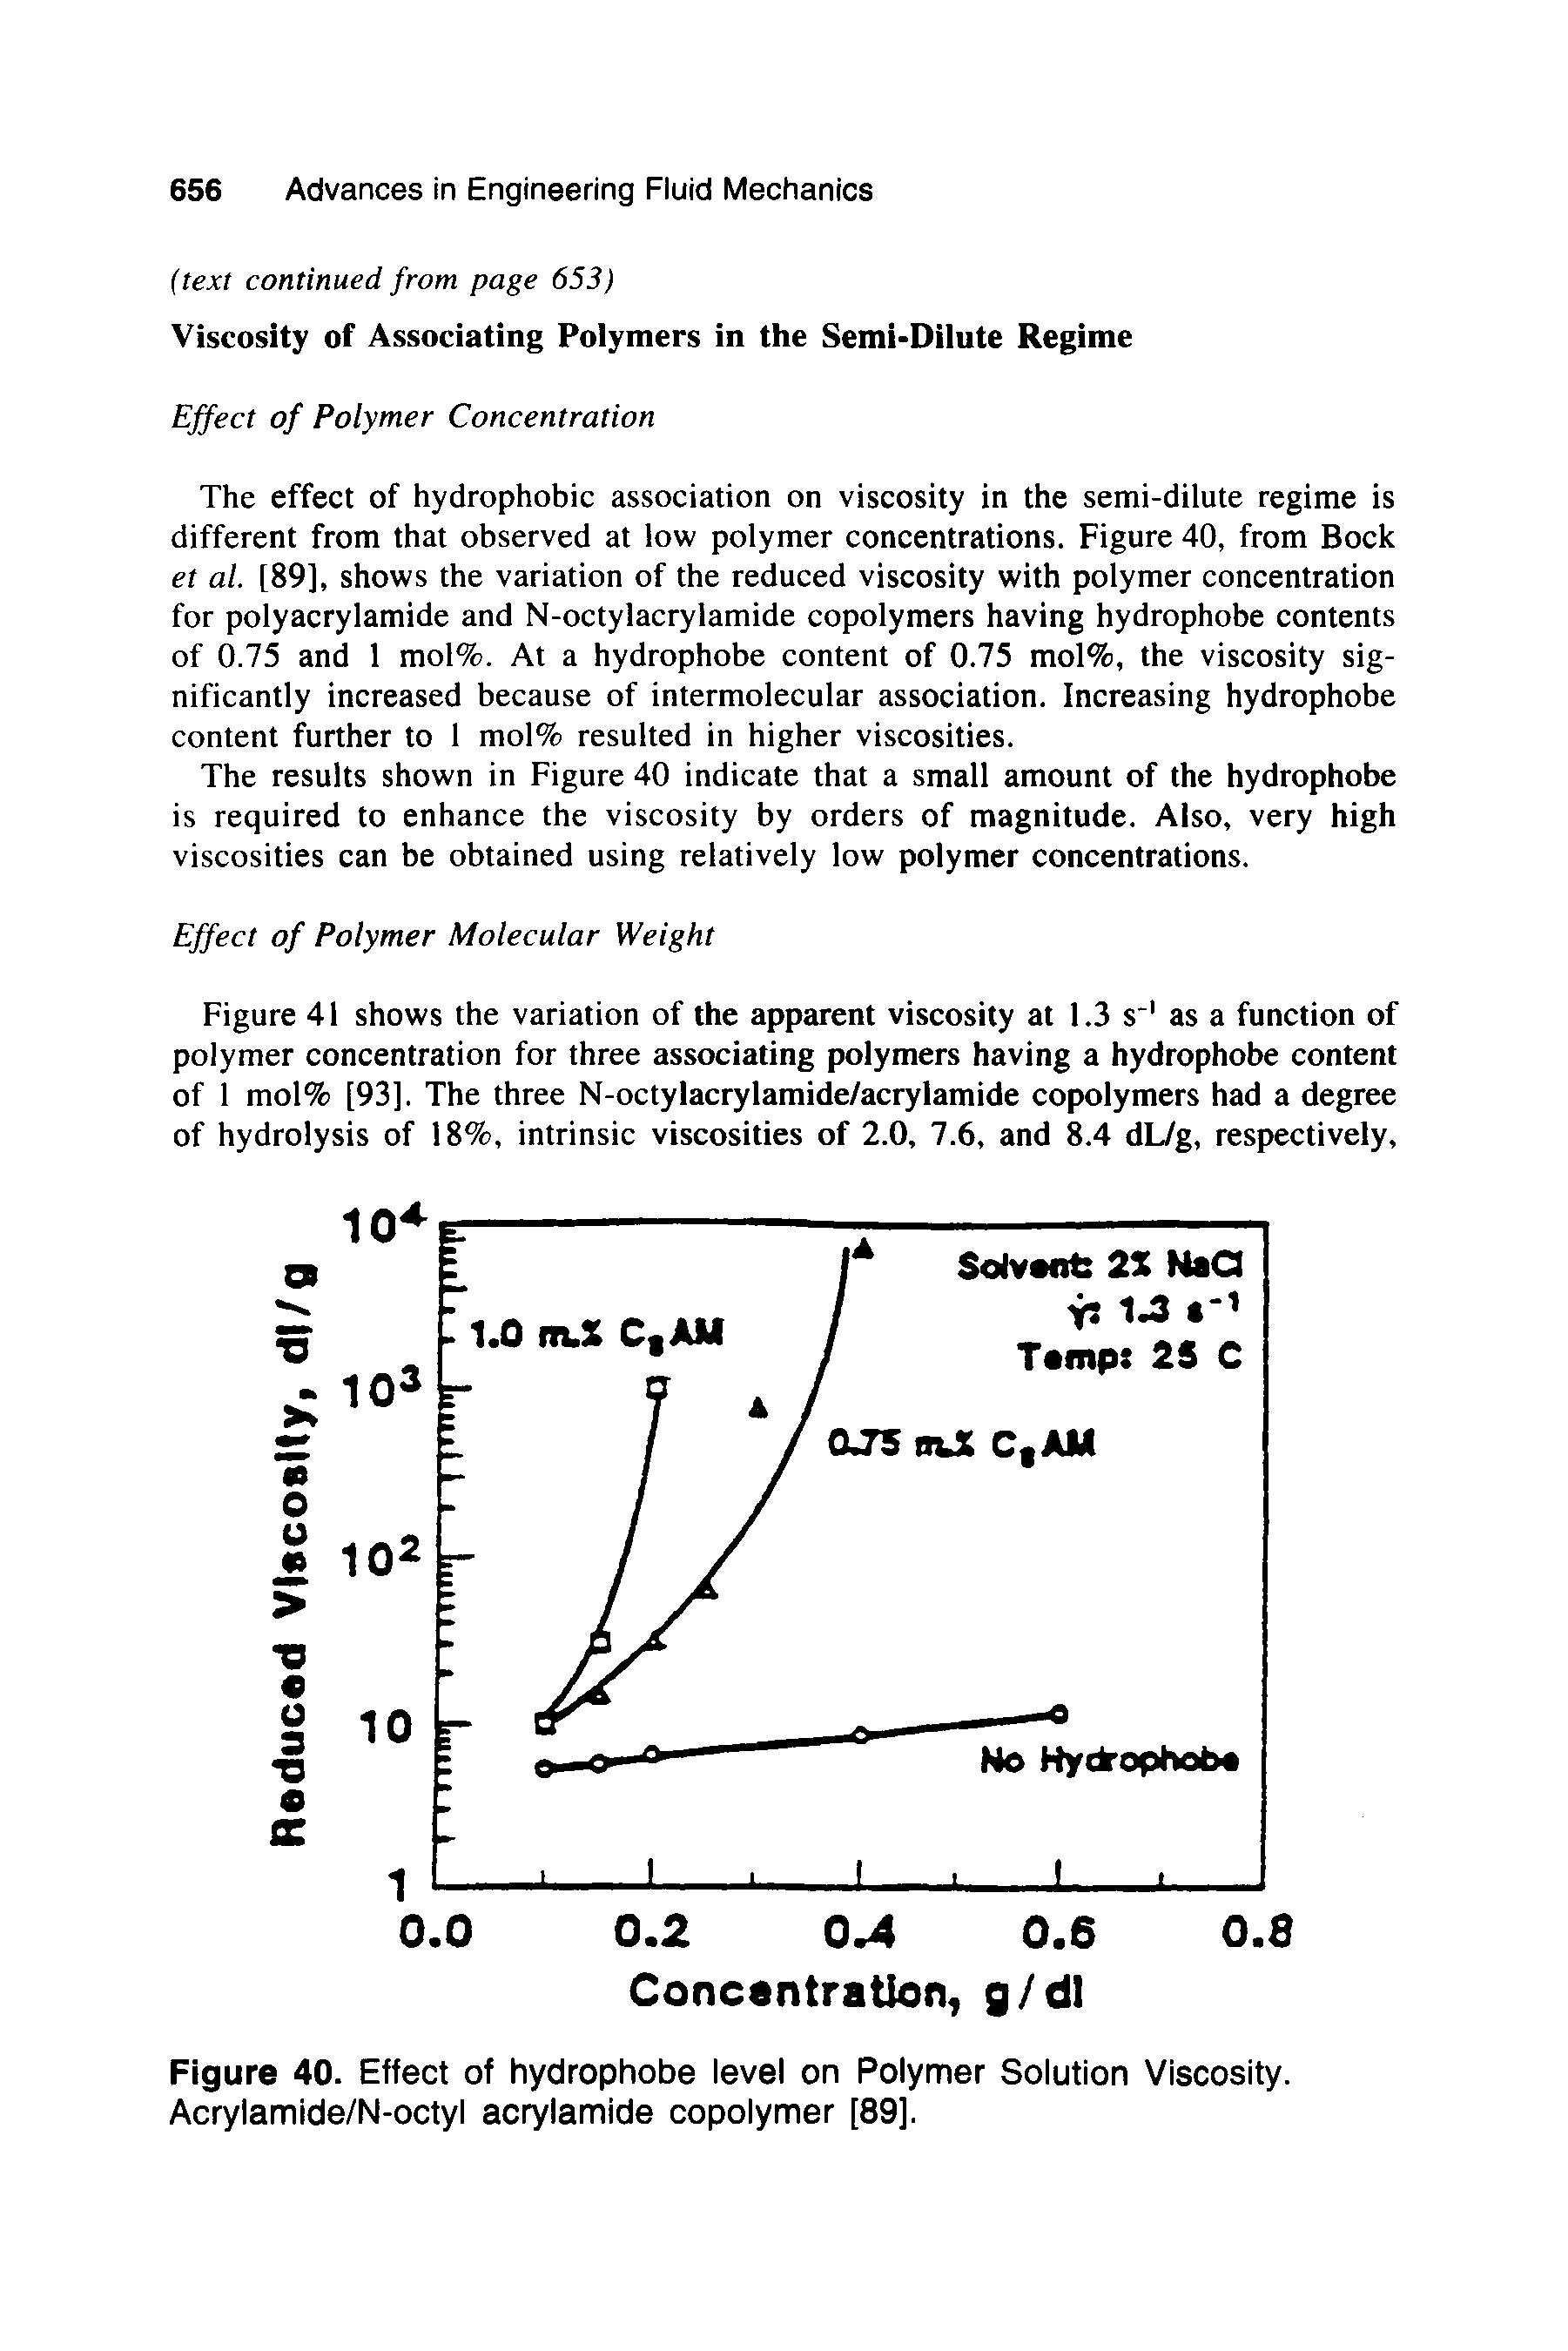 Figure 40. Effect of hydrophobe level on Polymer Solution Viscosity. Acrylamide/N-octyl acrylamide copolymer [89].